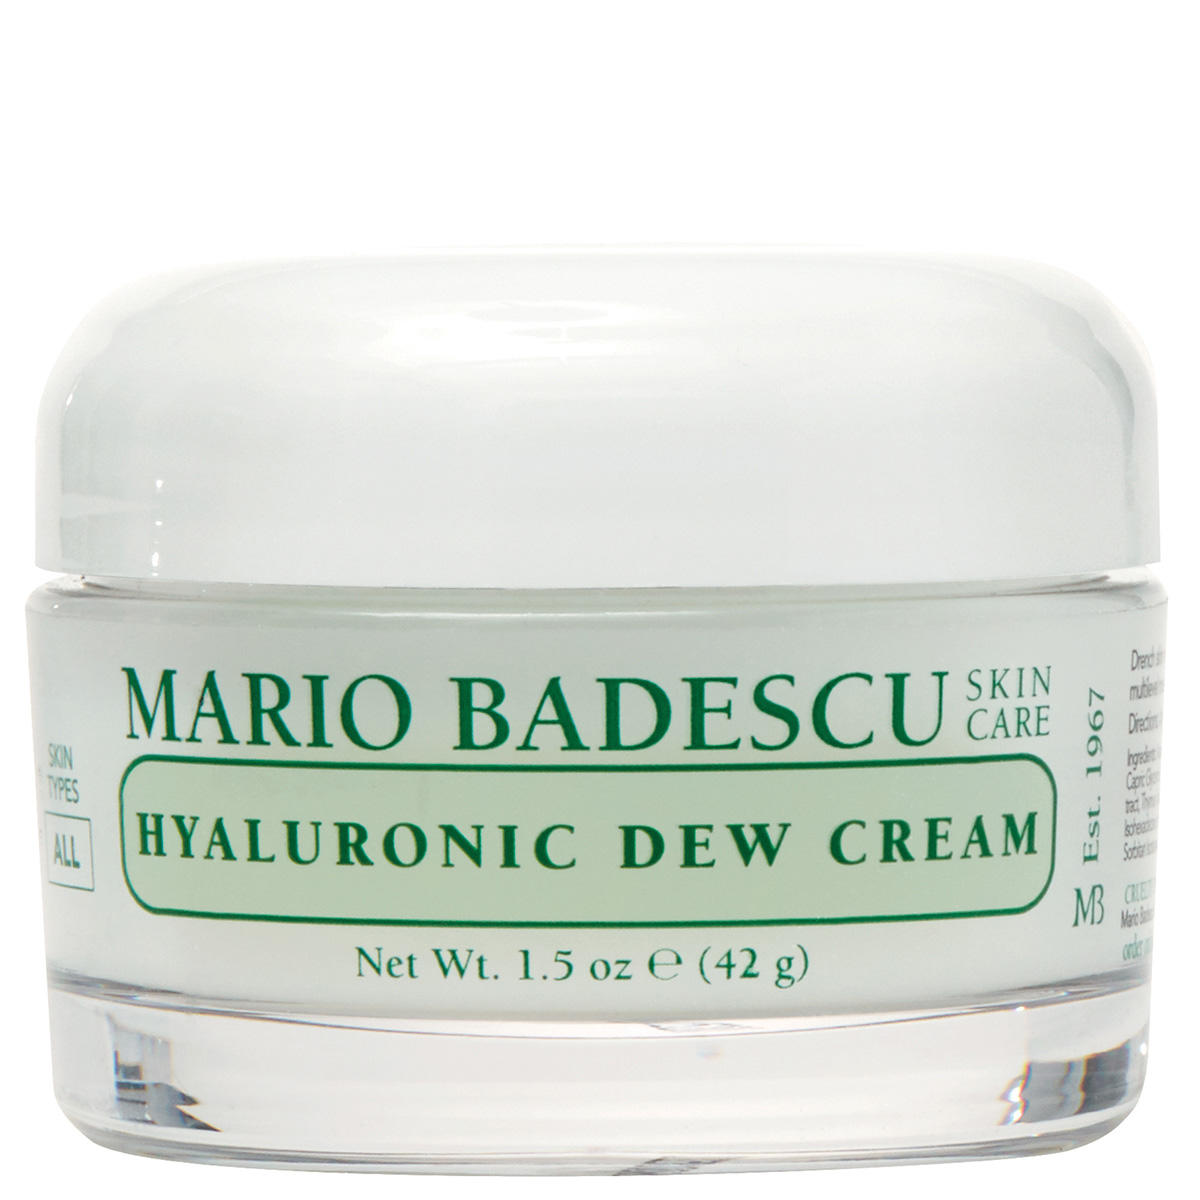 MARIO BADESCU Hyaluronic Dew Cream 42 g - 1